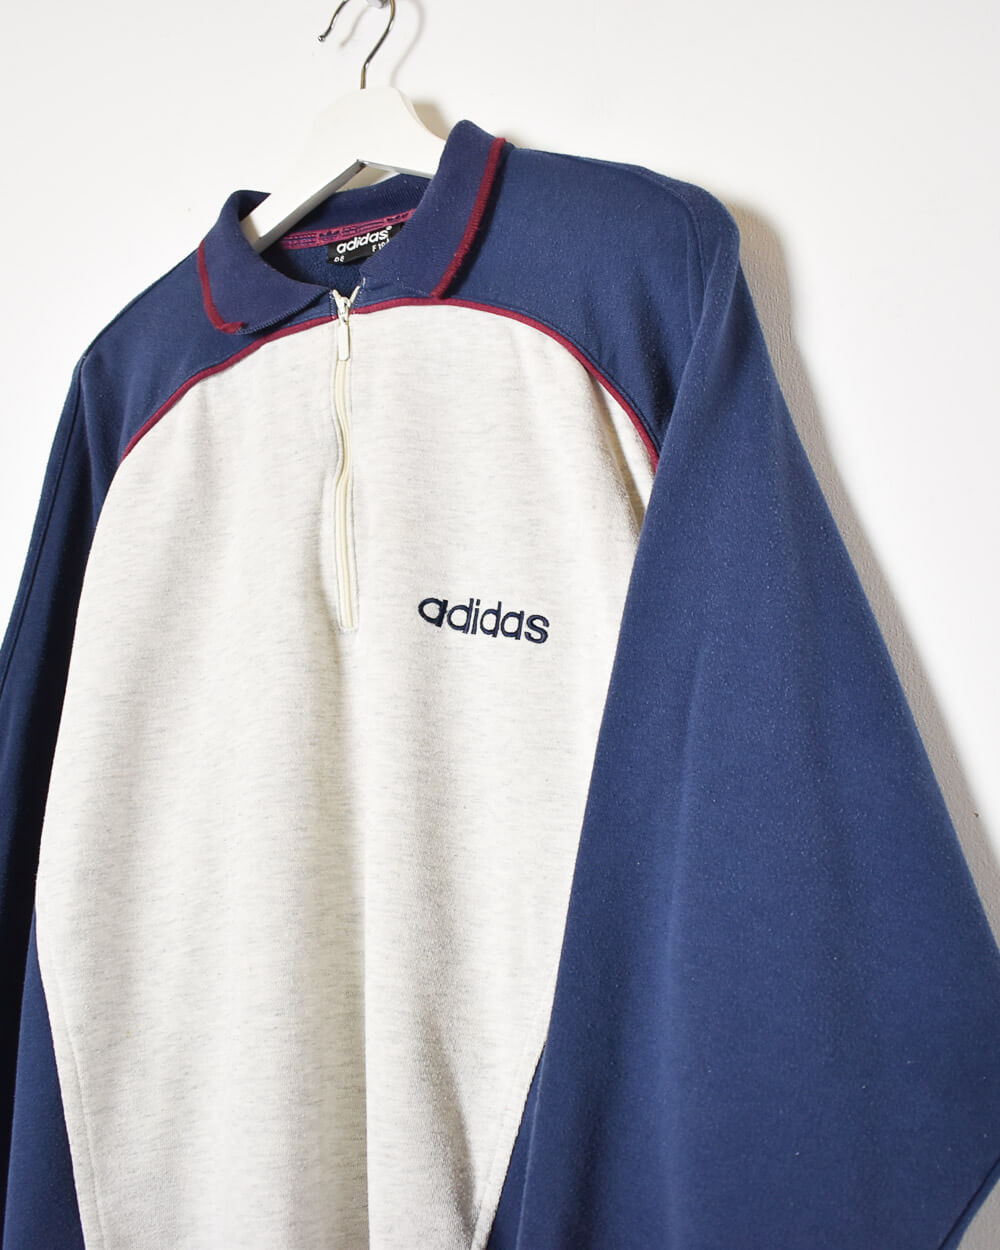 Navy Adidas 1/4 Zip Sweatshirt - Small